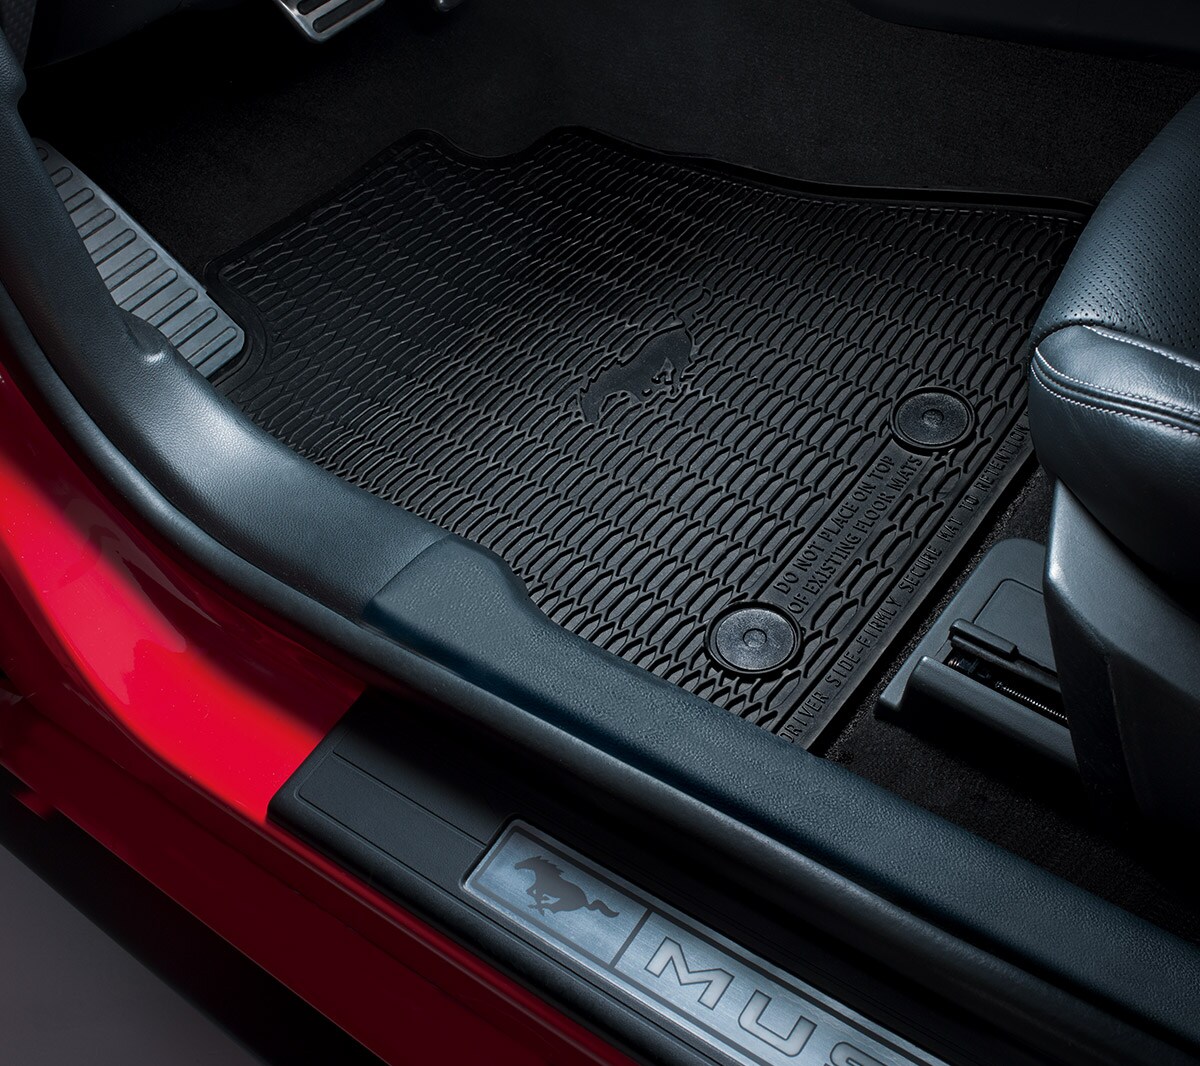 Ford Mustang GT. Innenraum-Detailansicht der Fußmatten